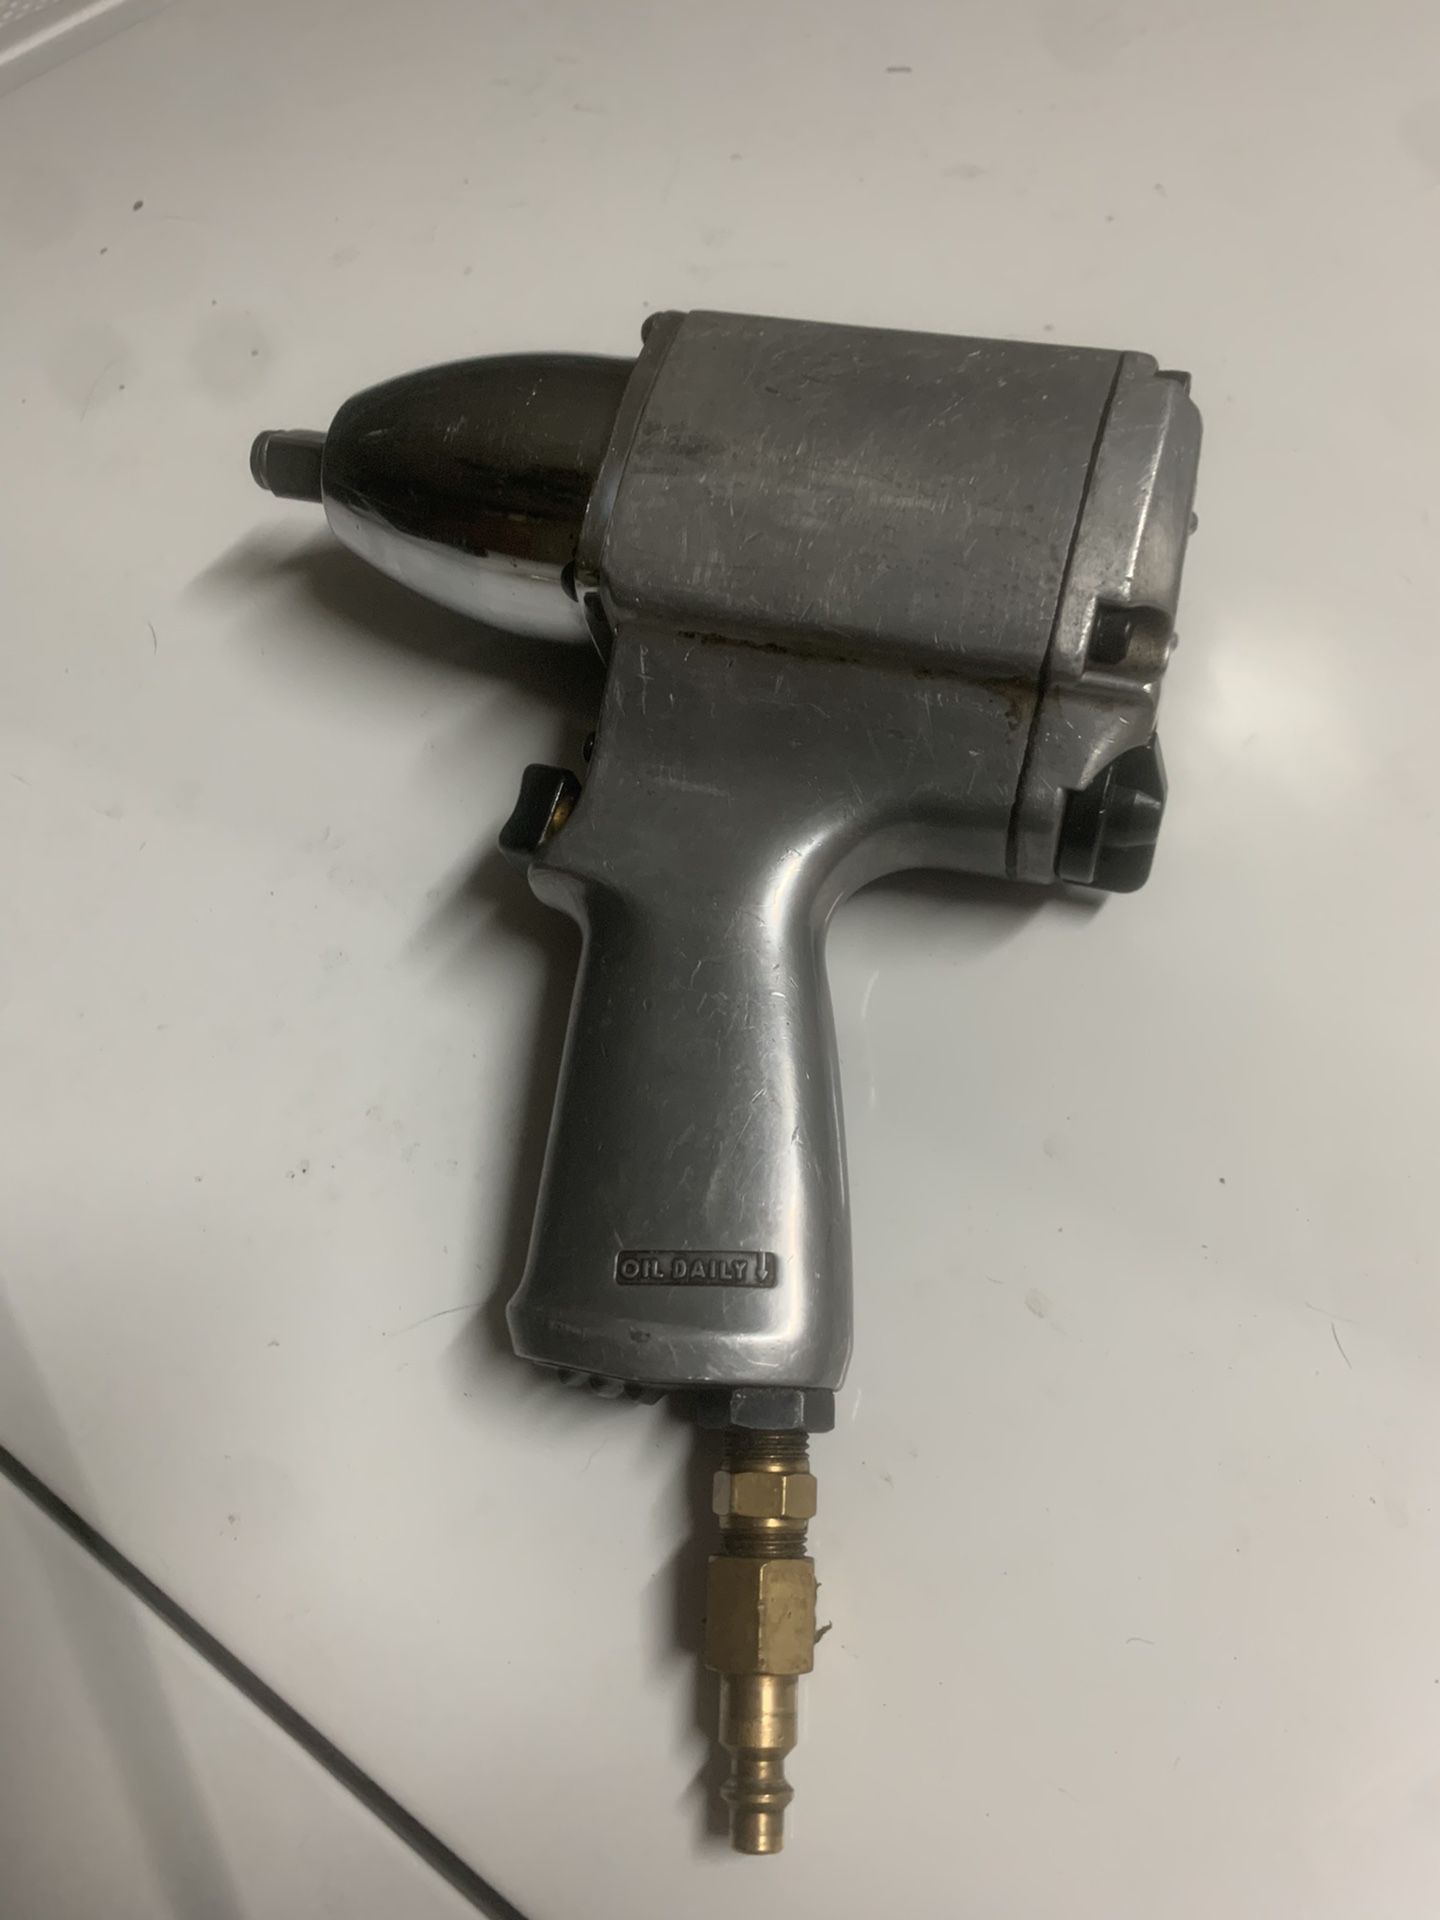 Vintage Napa 1/2” Air Impact Wrench